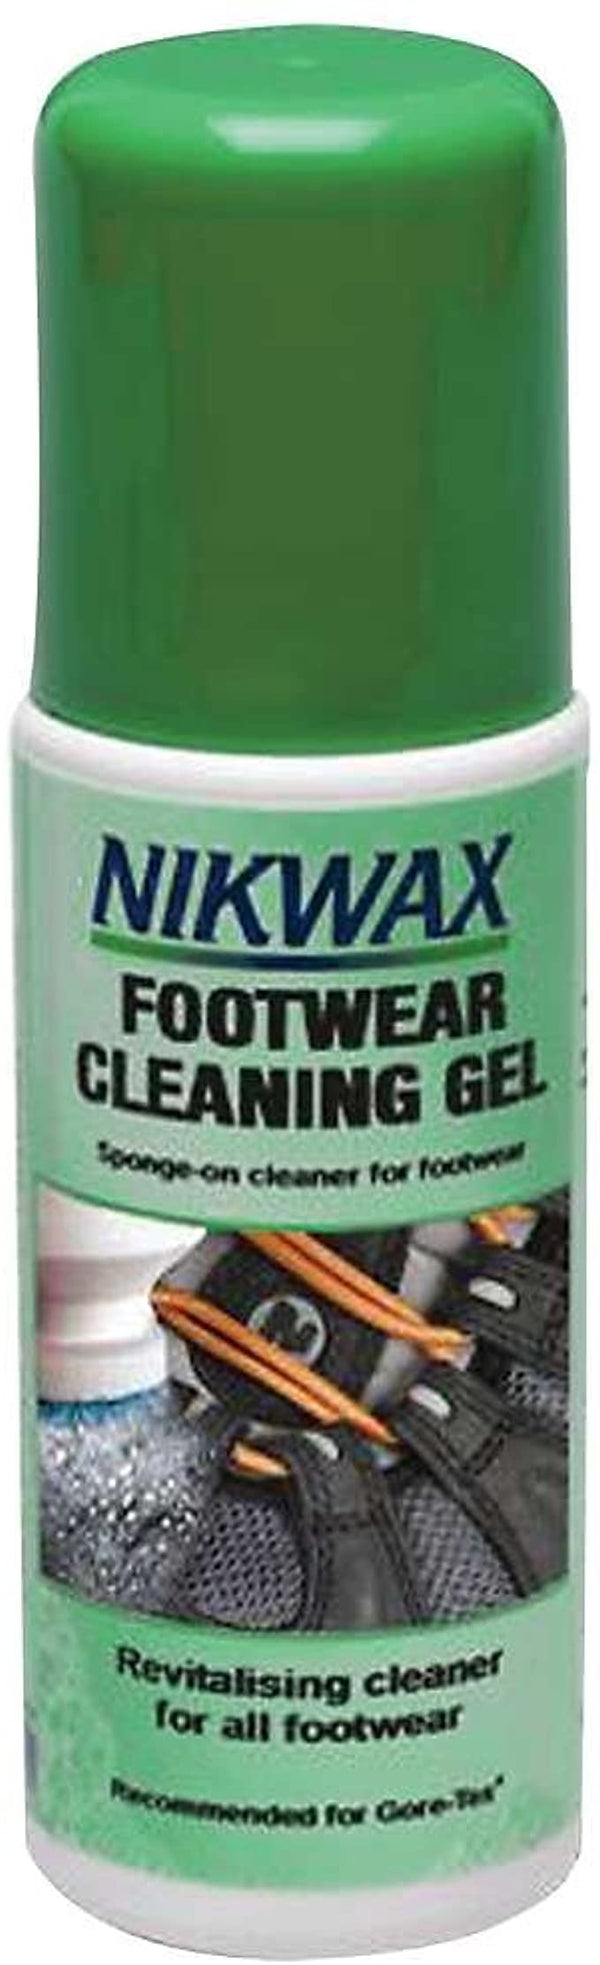 Nikwax Footwear Cleaning Gel - Ascent Outdoors LLC